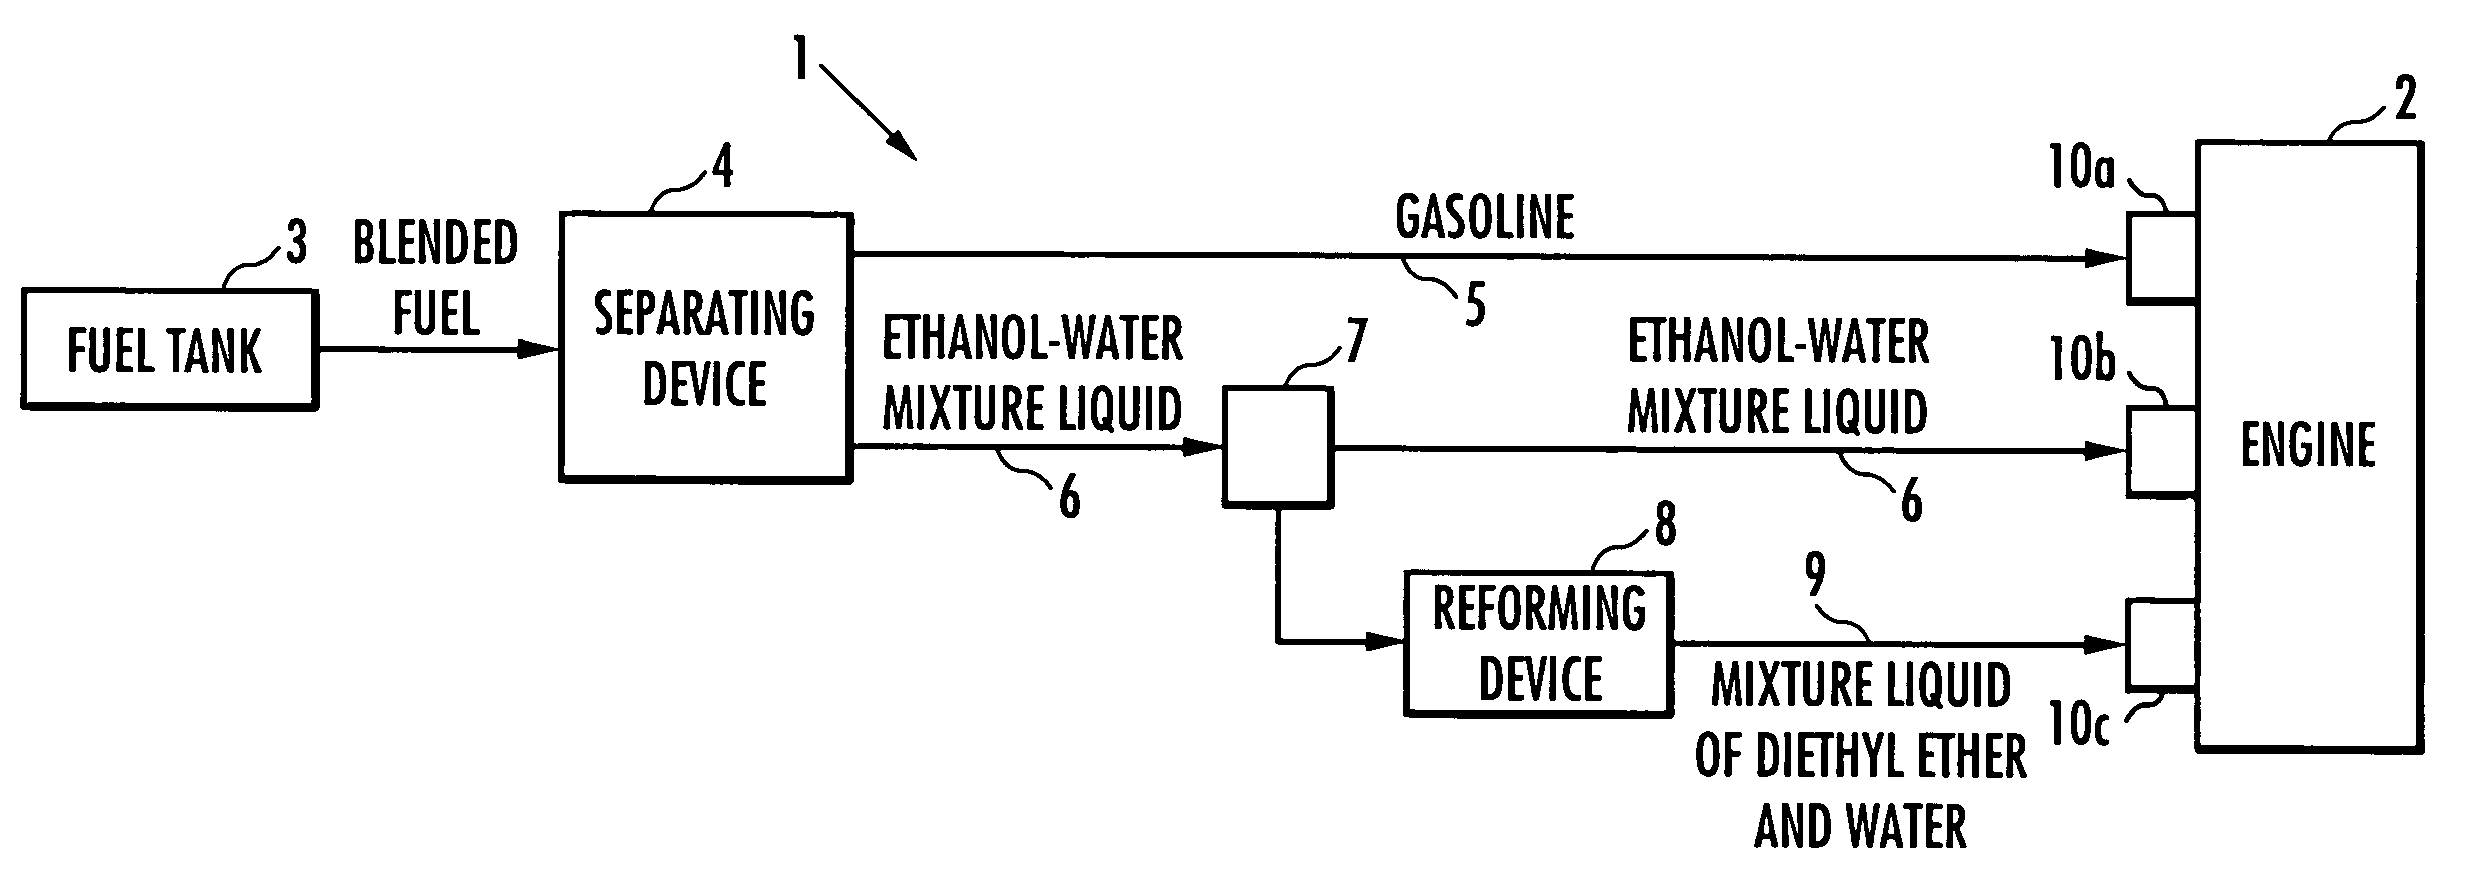 Internal combustion engine system